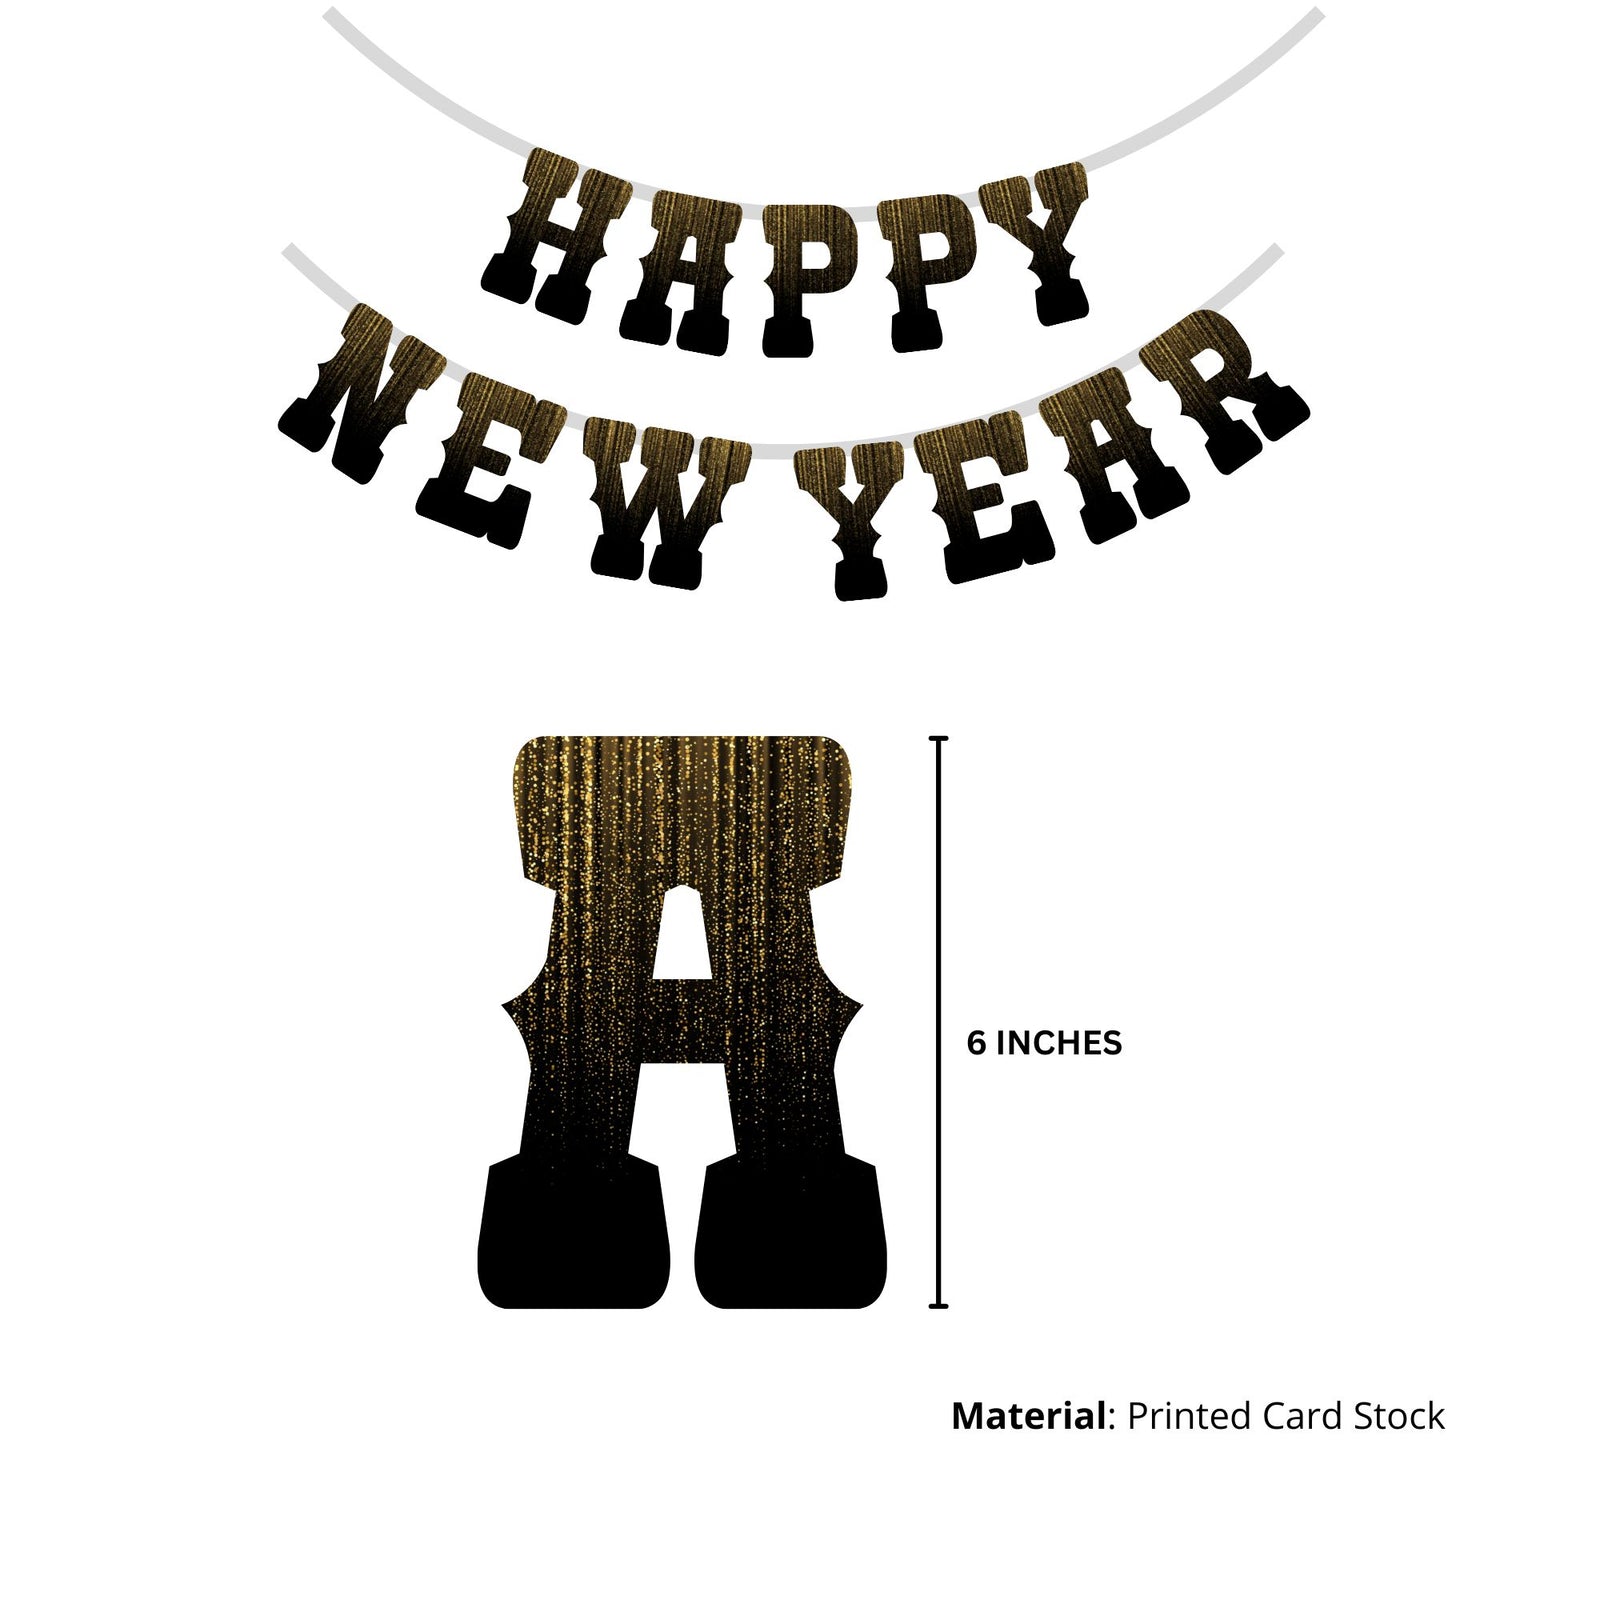 Happy New Year Decoration Kits- (10 Inches/Latex/Black, Metallic Gold, Silver Chrome/69 Pcs)